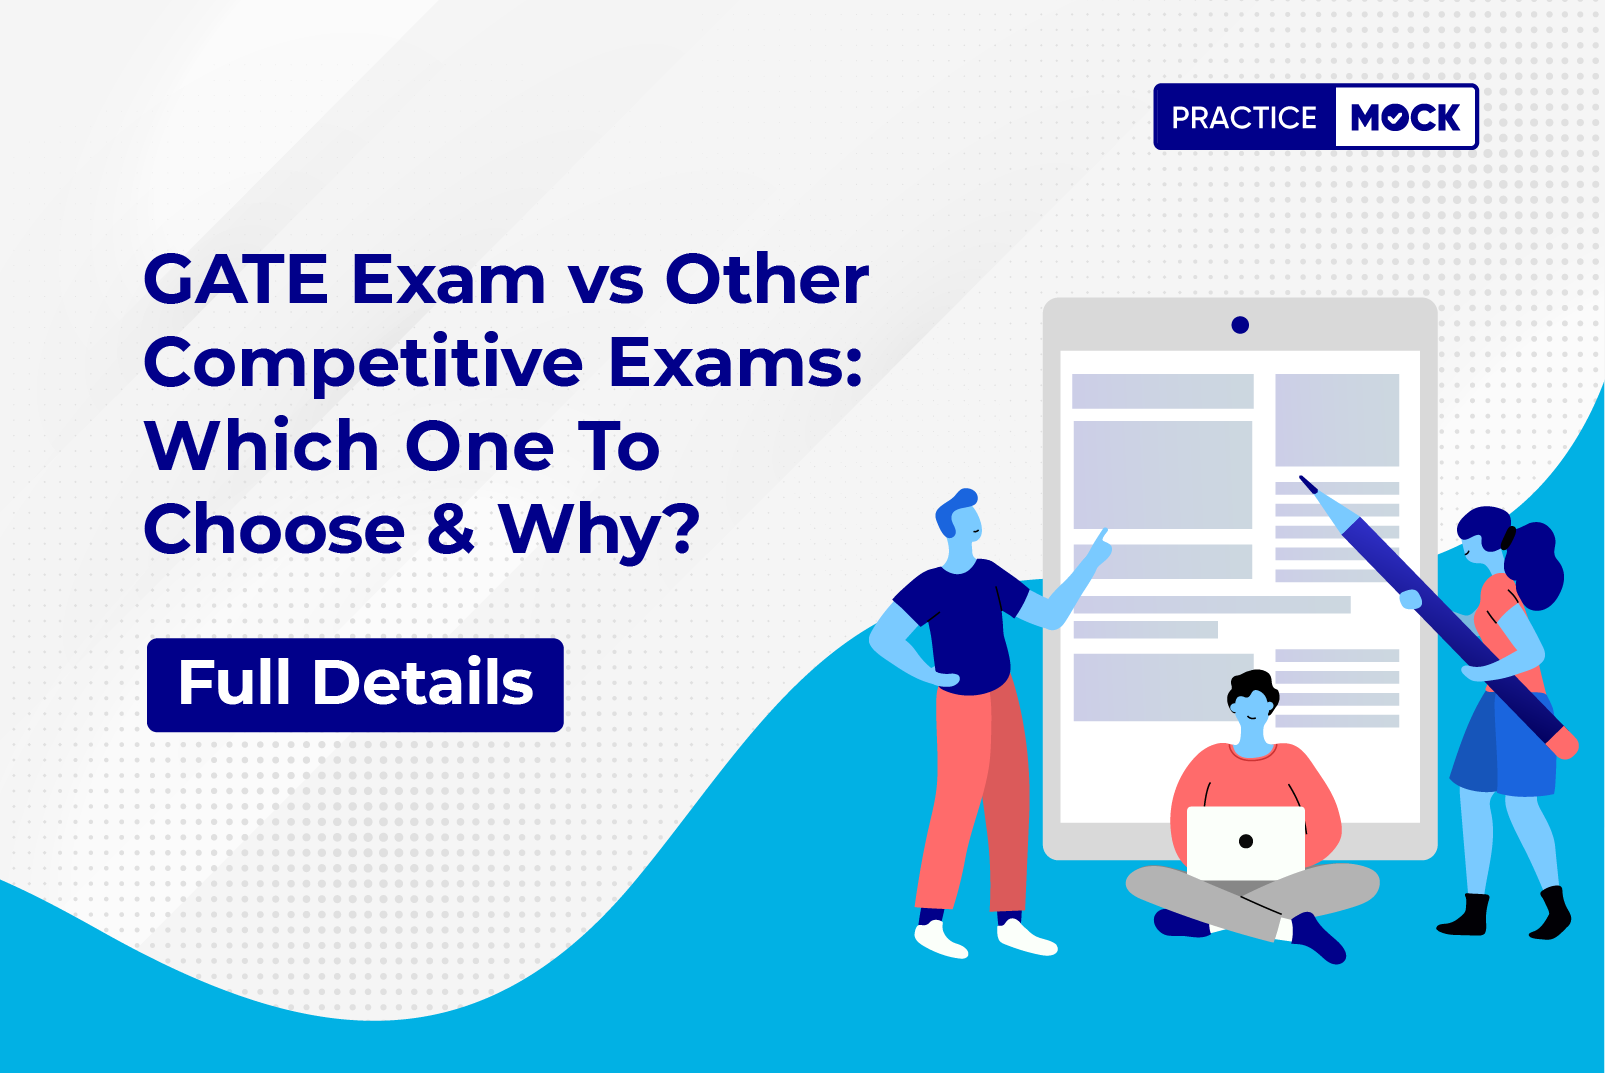 FI_GATE_Exam_Competitive_100423